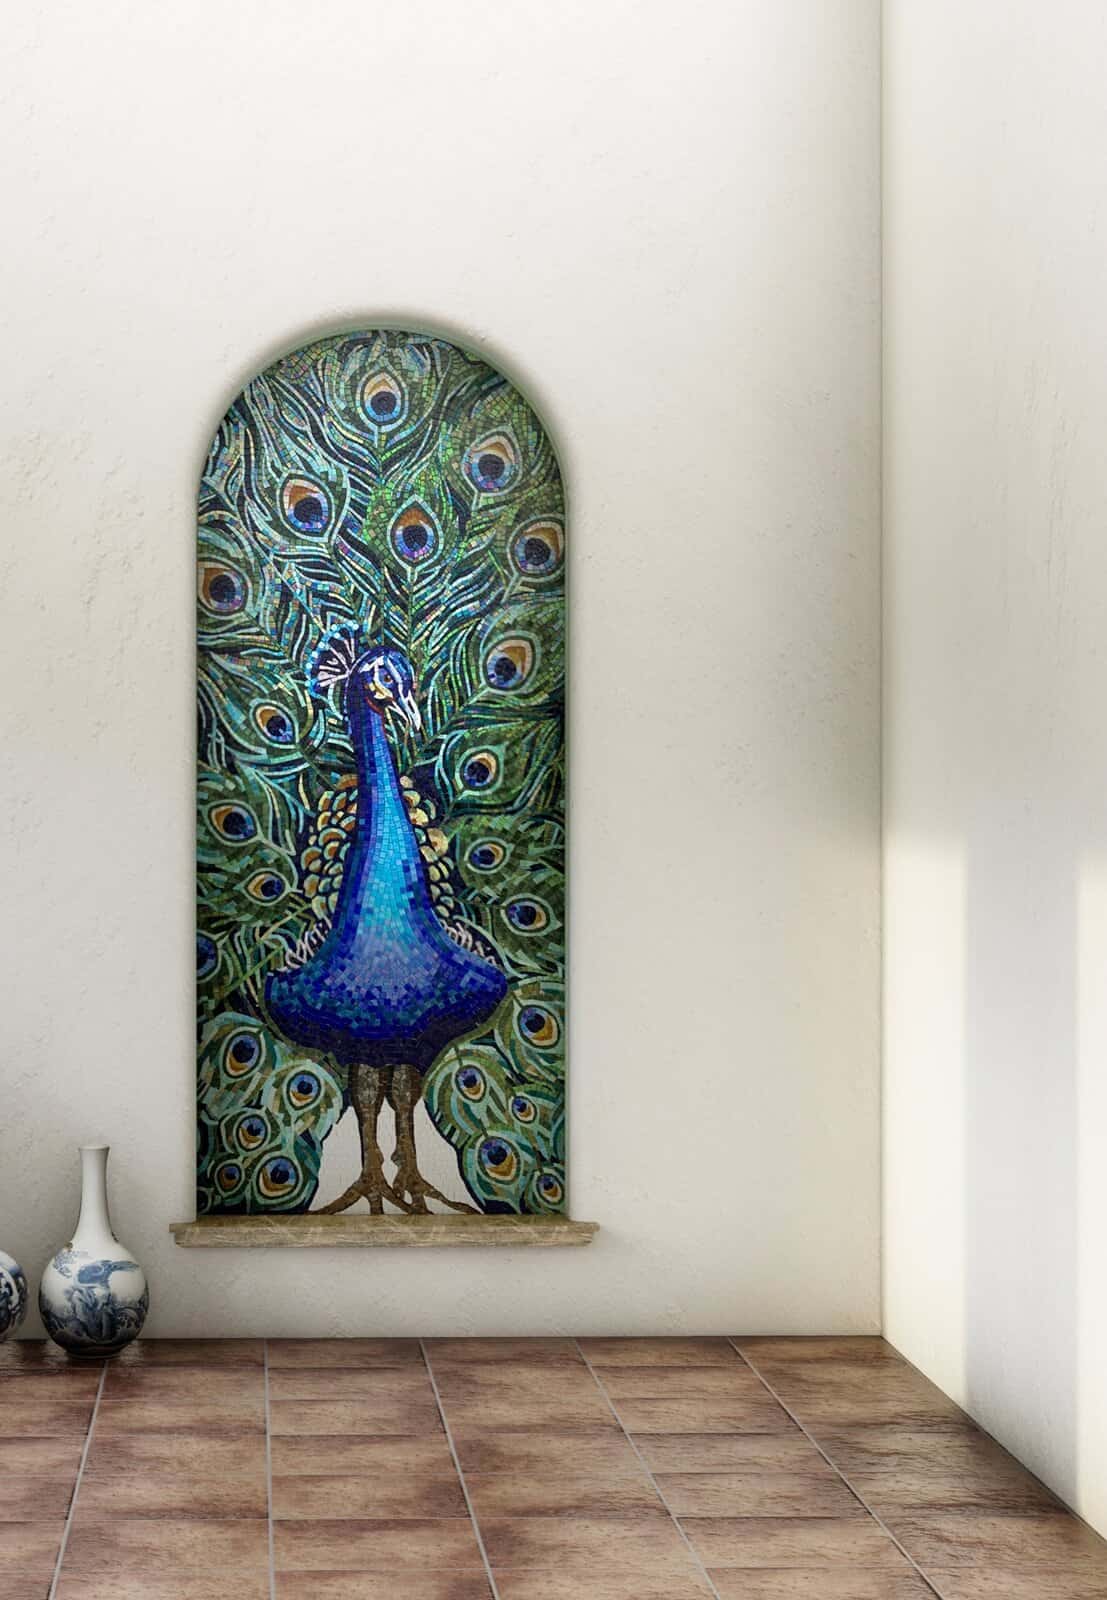 wall niche peacock mosaic design handmade with glass tiles